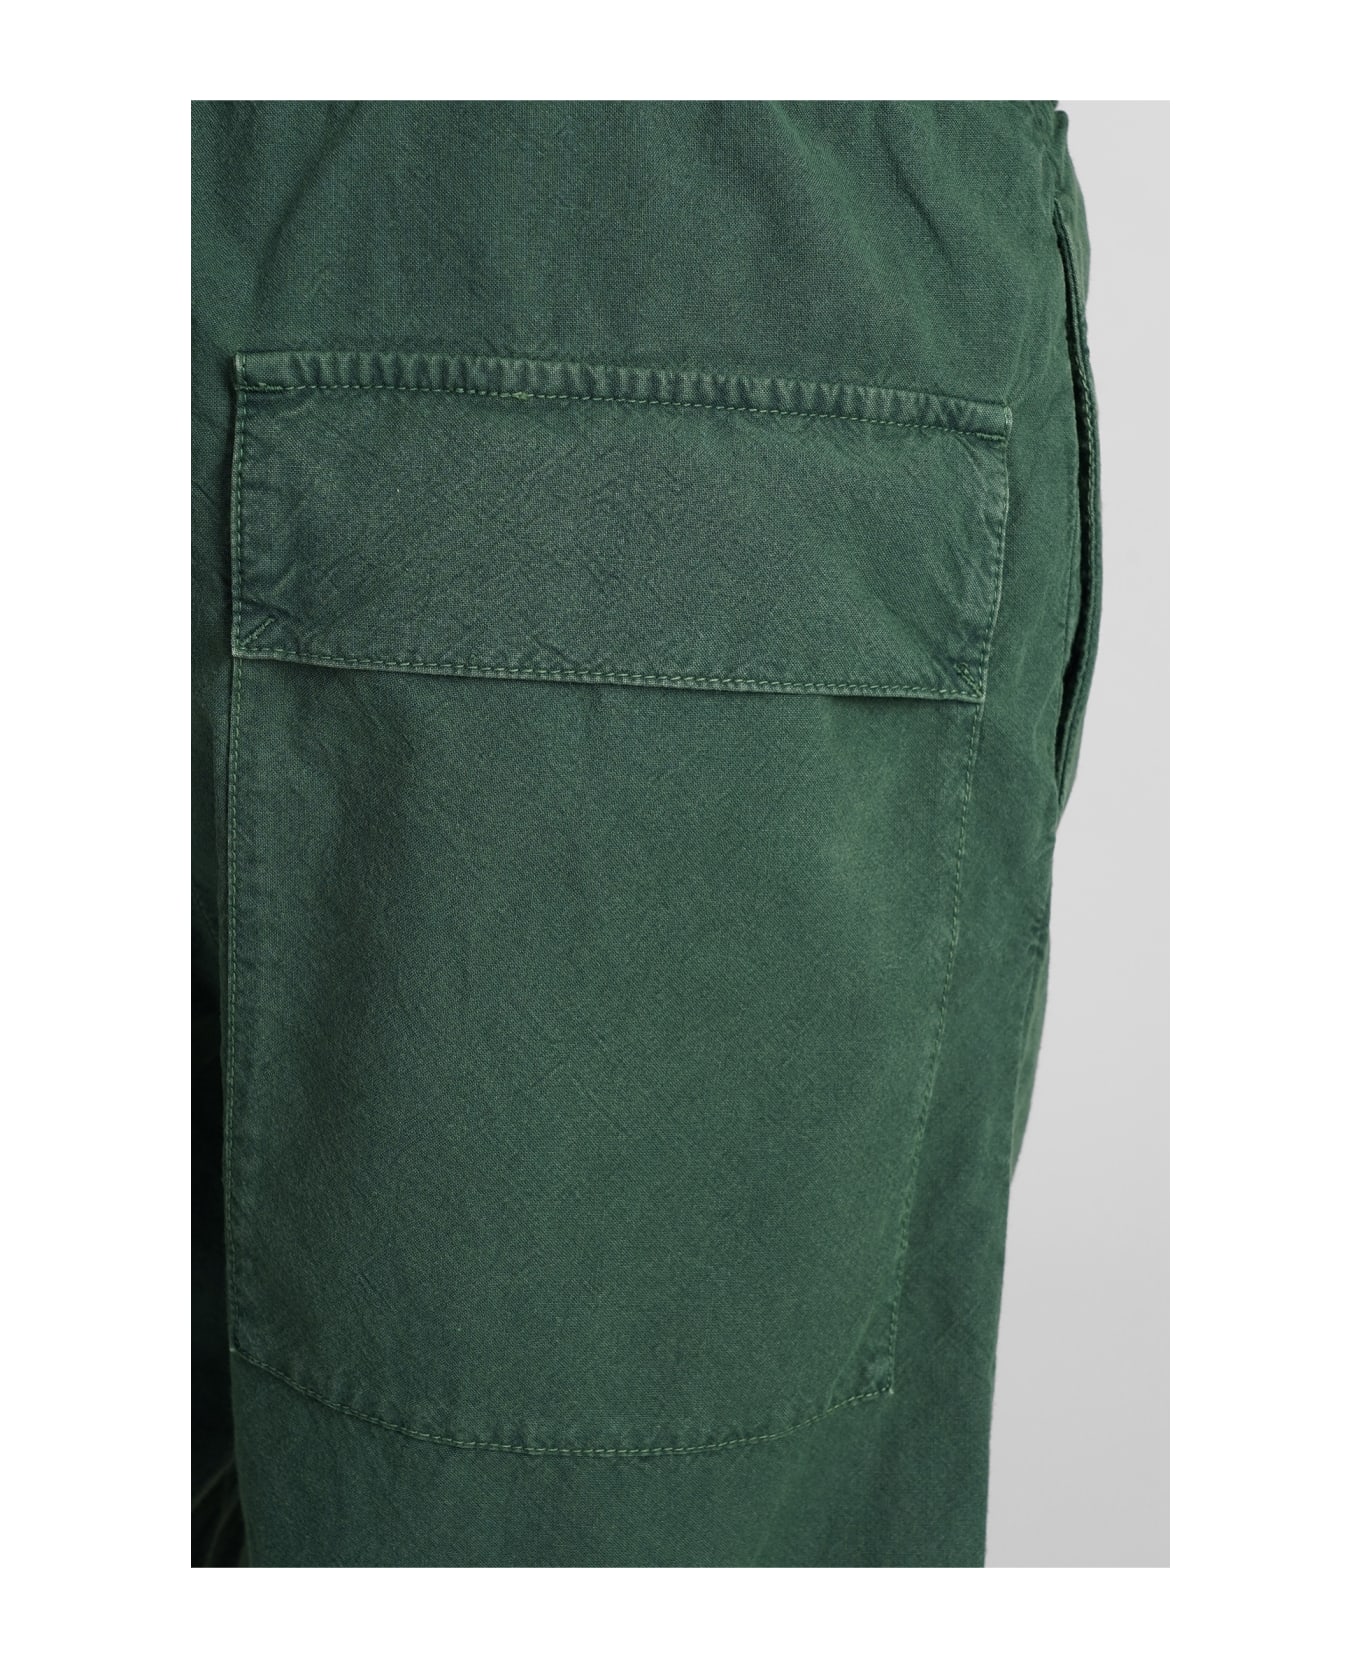 Barena Canariol Shorts In Green Cotton - green ショートパンツ